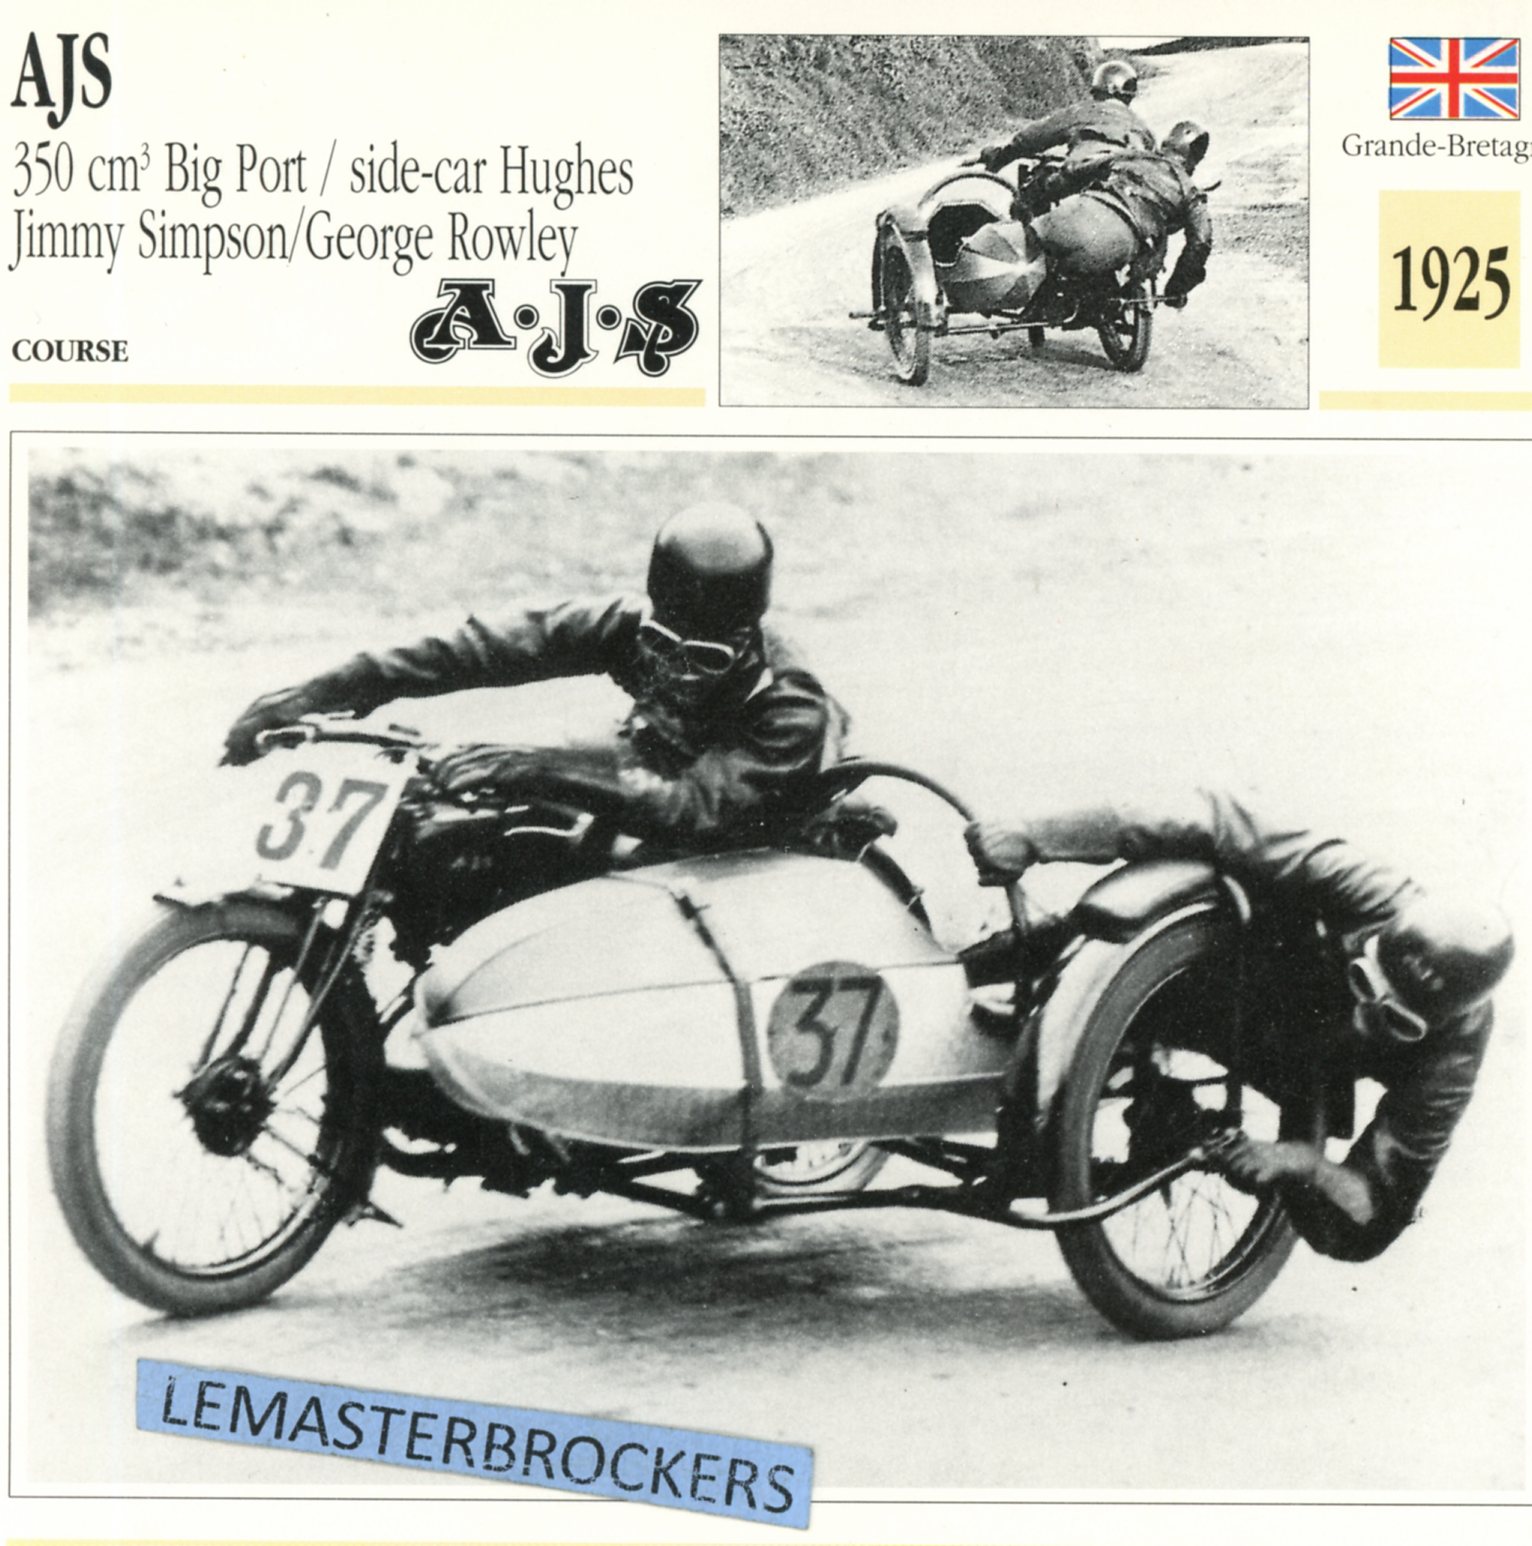 AJS-BJG-PORT-SIDE-CAR-HUGHES-1925-CARTE-CARD-FICHE-MOTO-LEMASTERBROCKERS